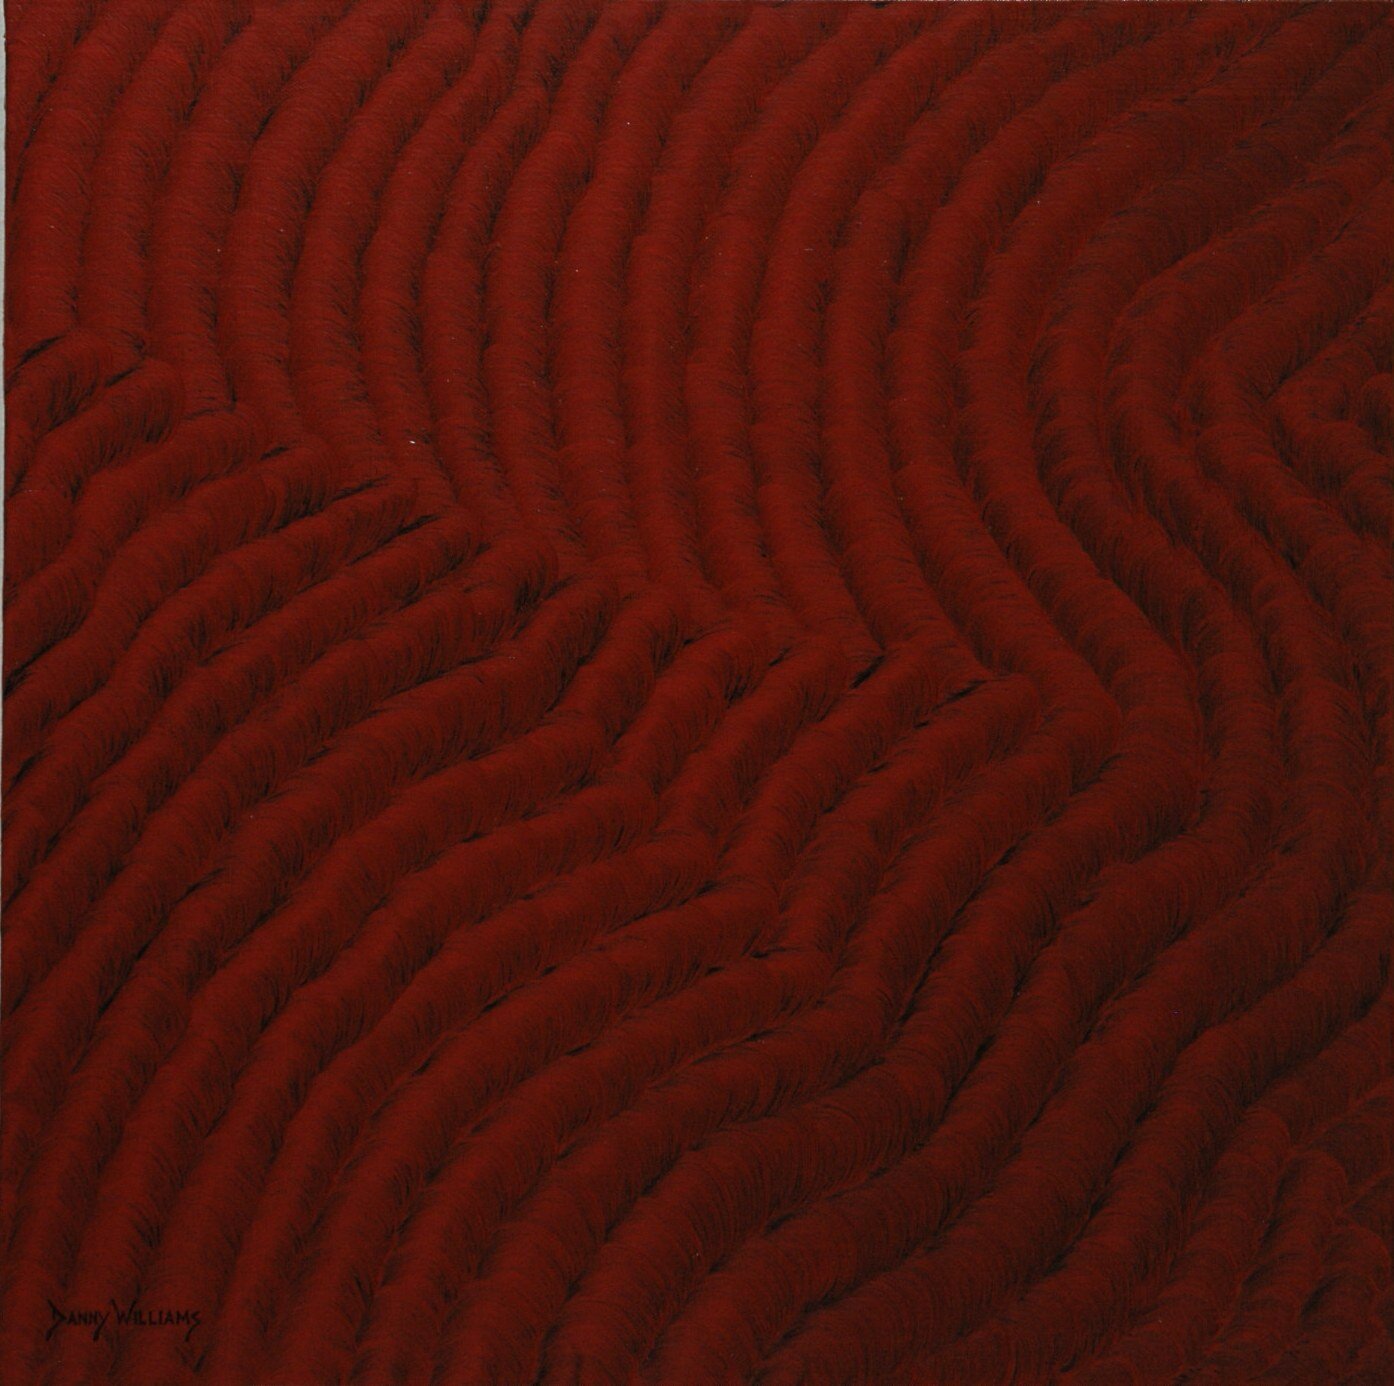   Crimson Chorus   Oil on canvas  18" x 18"  $700   Danny Williams  